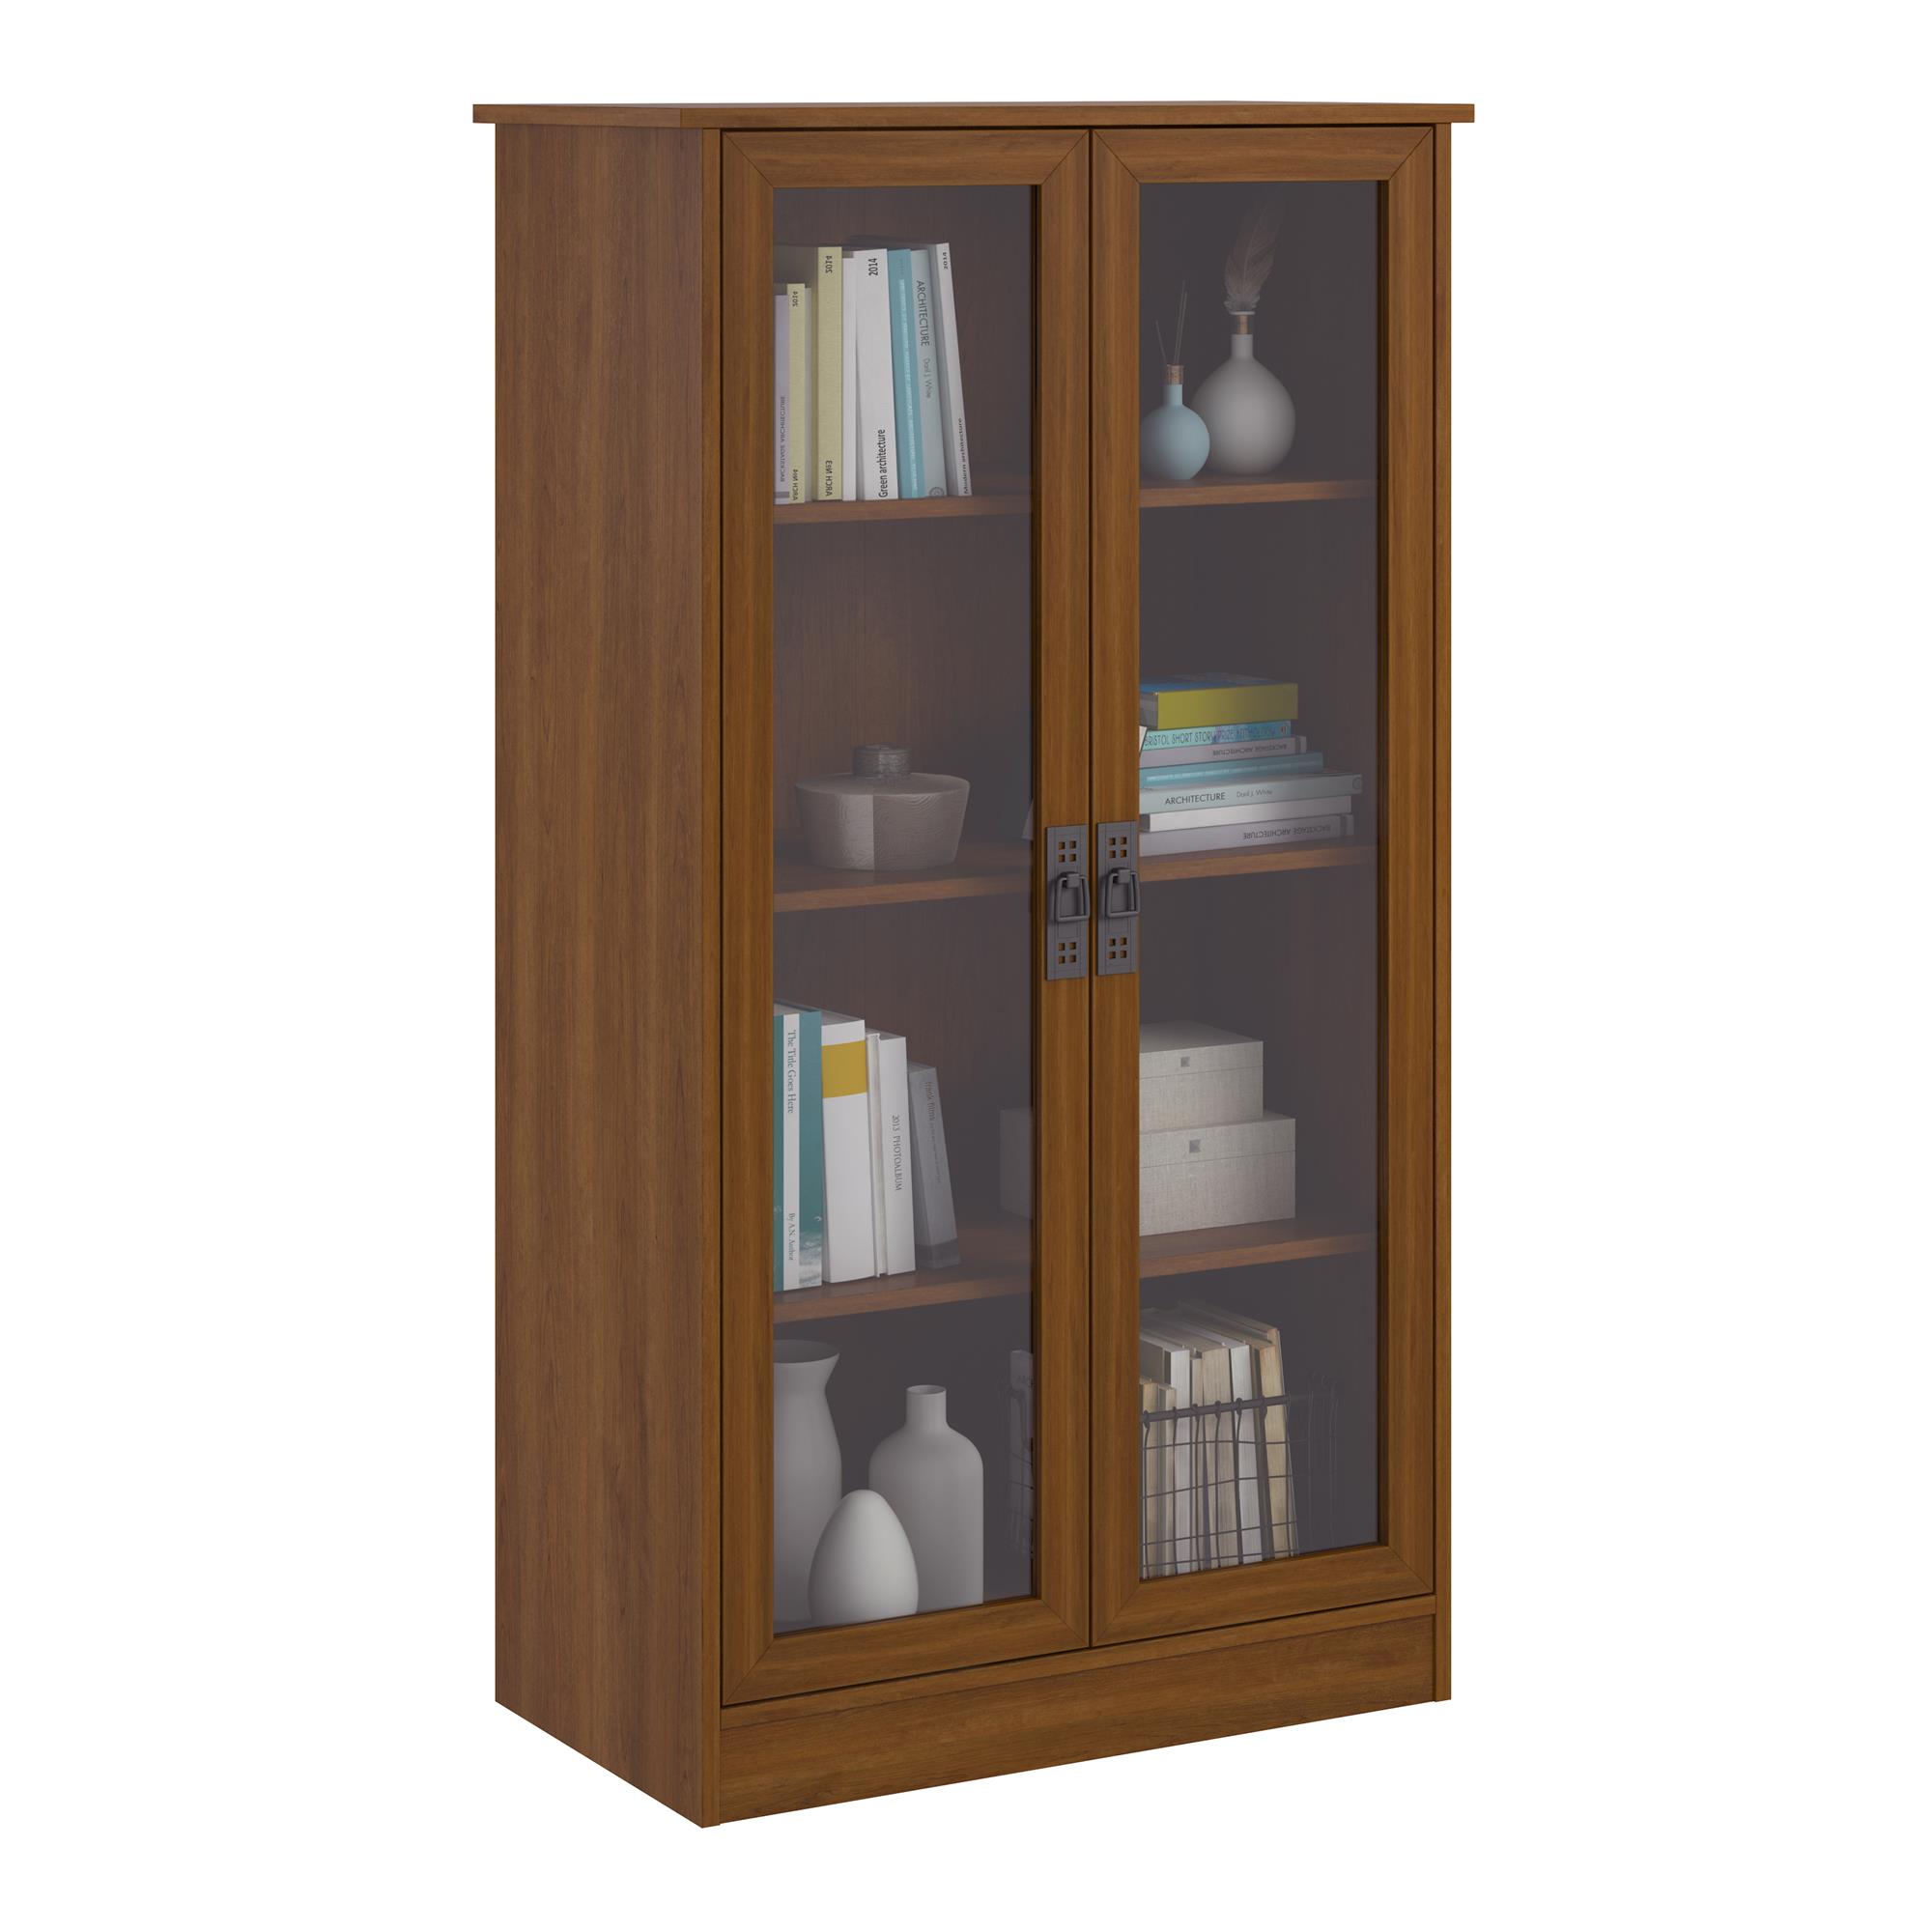 Led Tv Cabinet Tv Stand Bookshelf Files Books Storage Shelves With